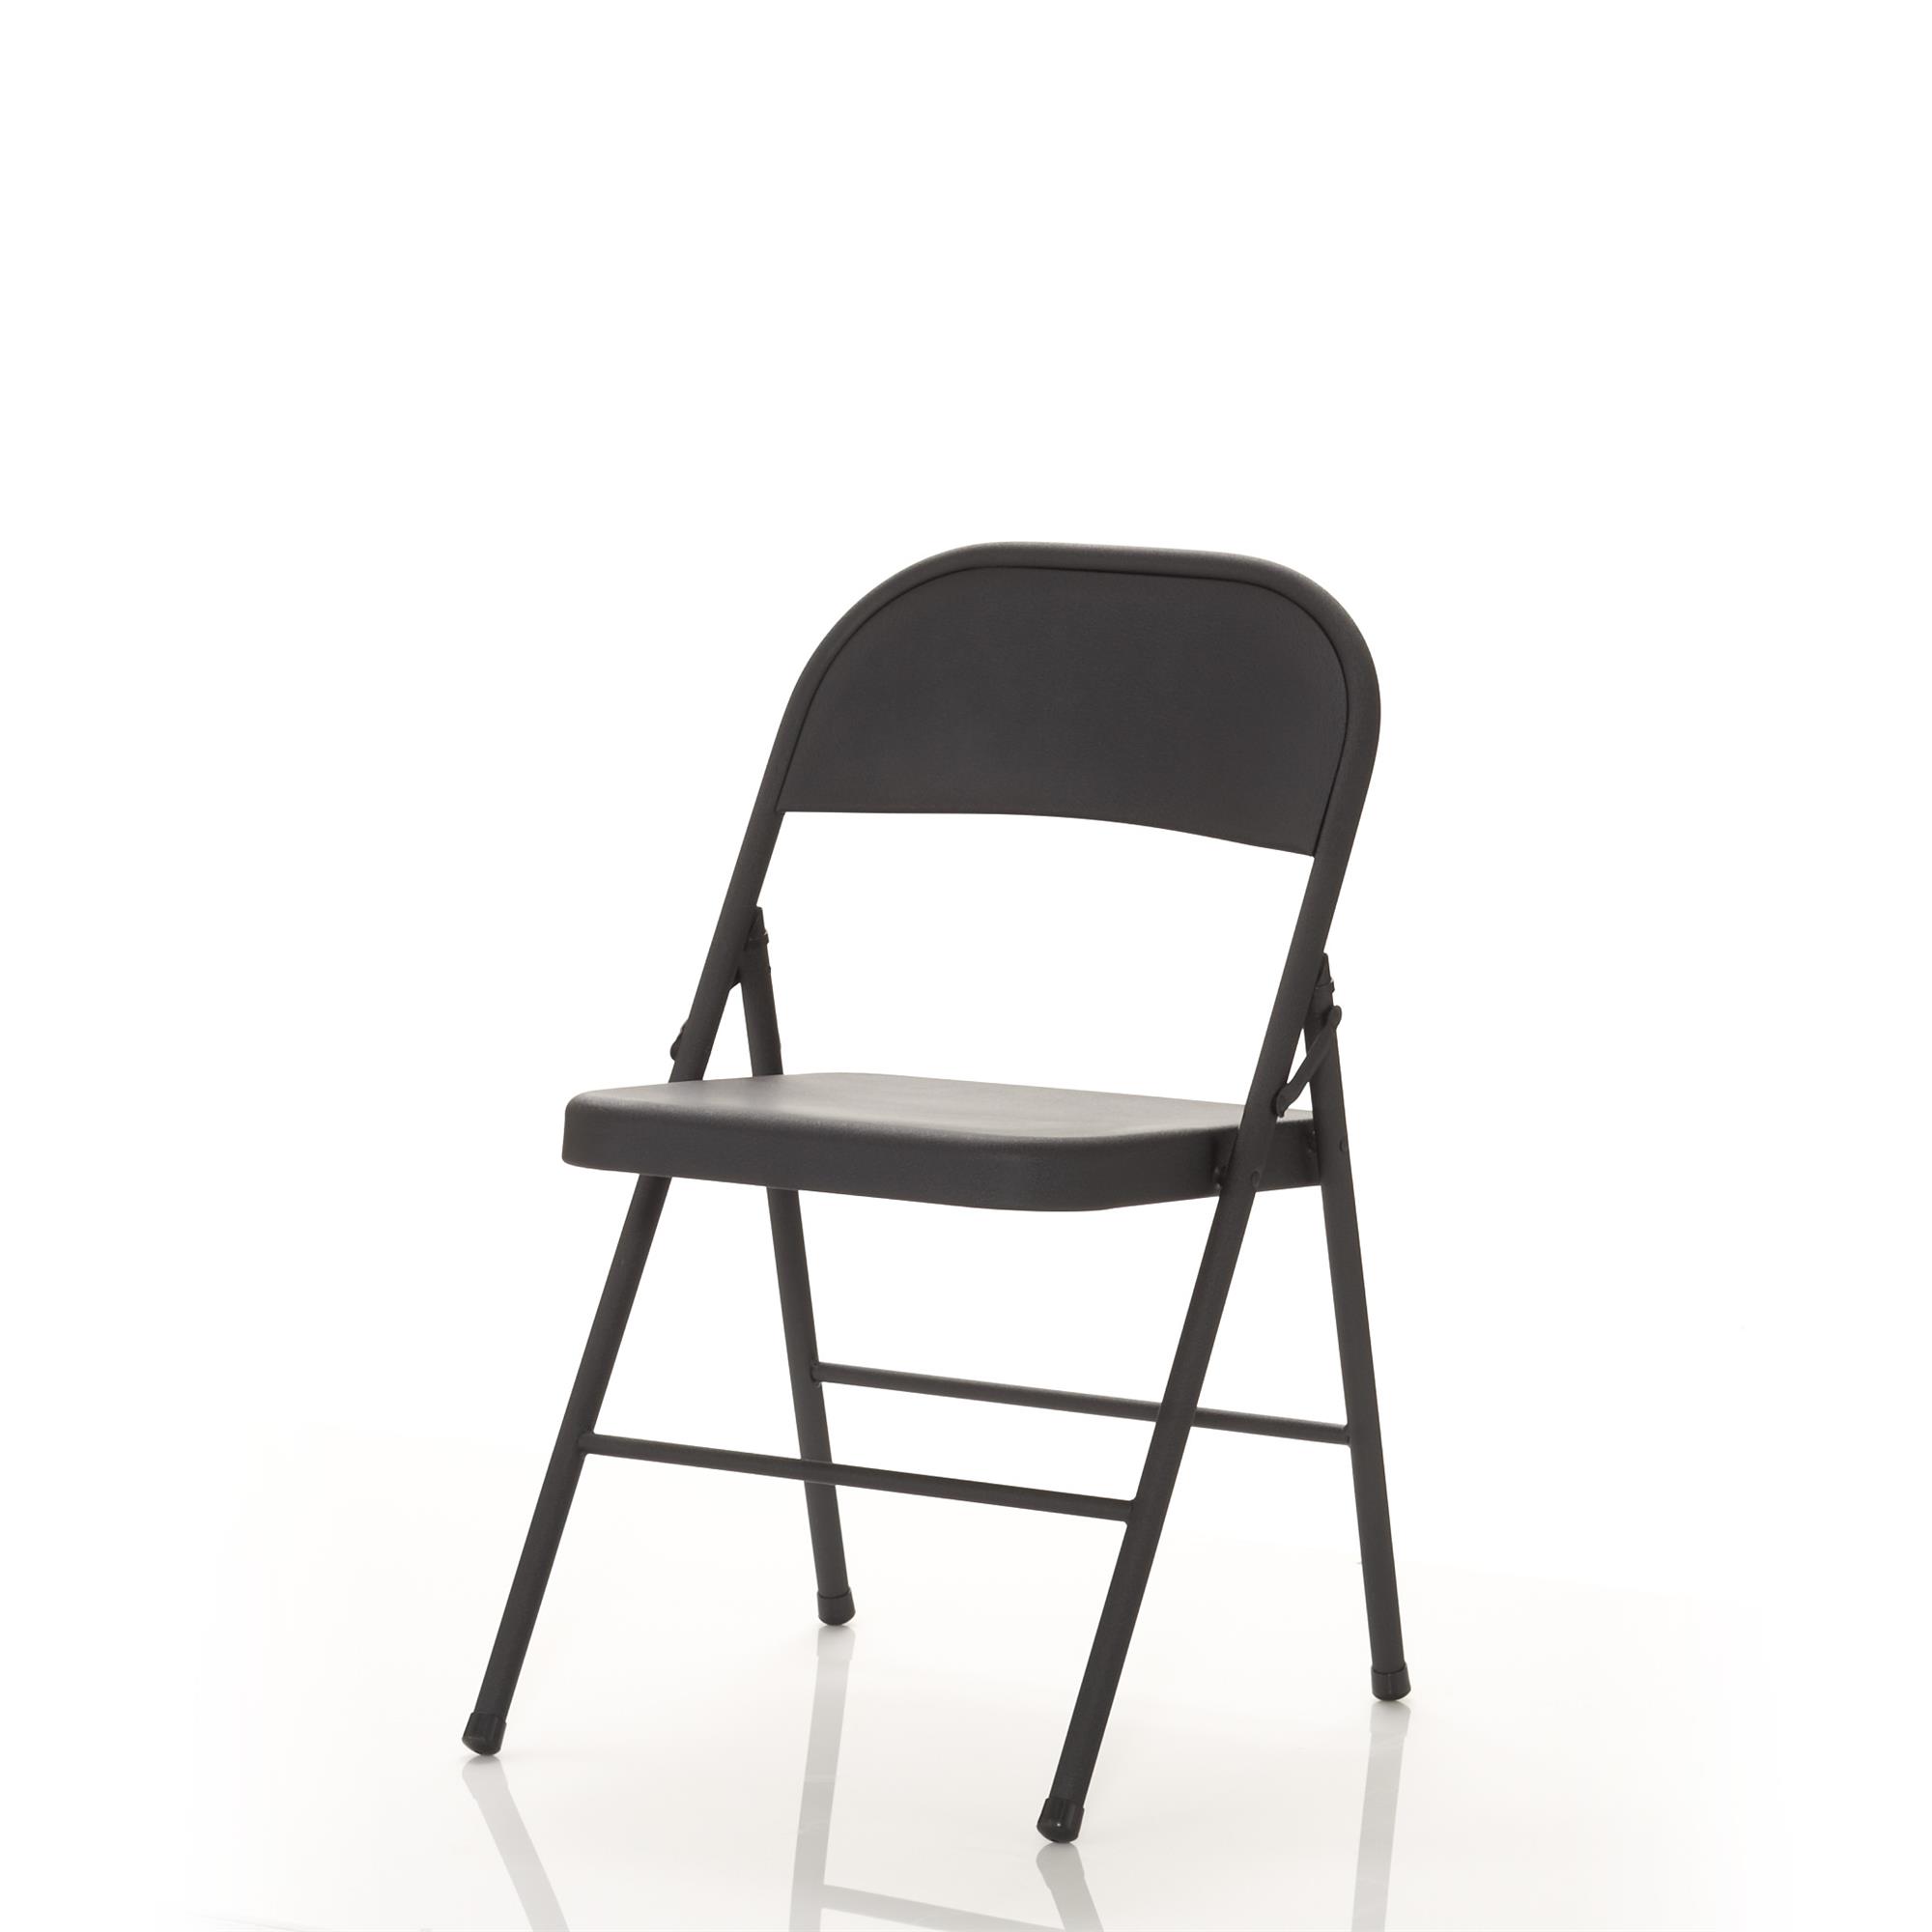 Mainstays Steel Folding Chair (4 Pack), Black - image 4 of 14